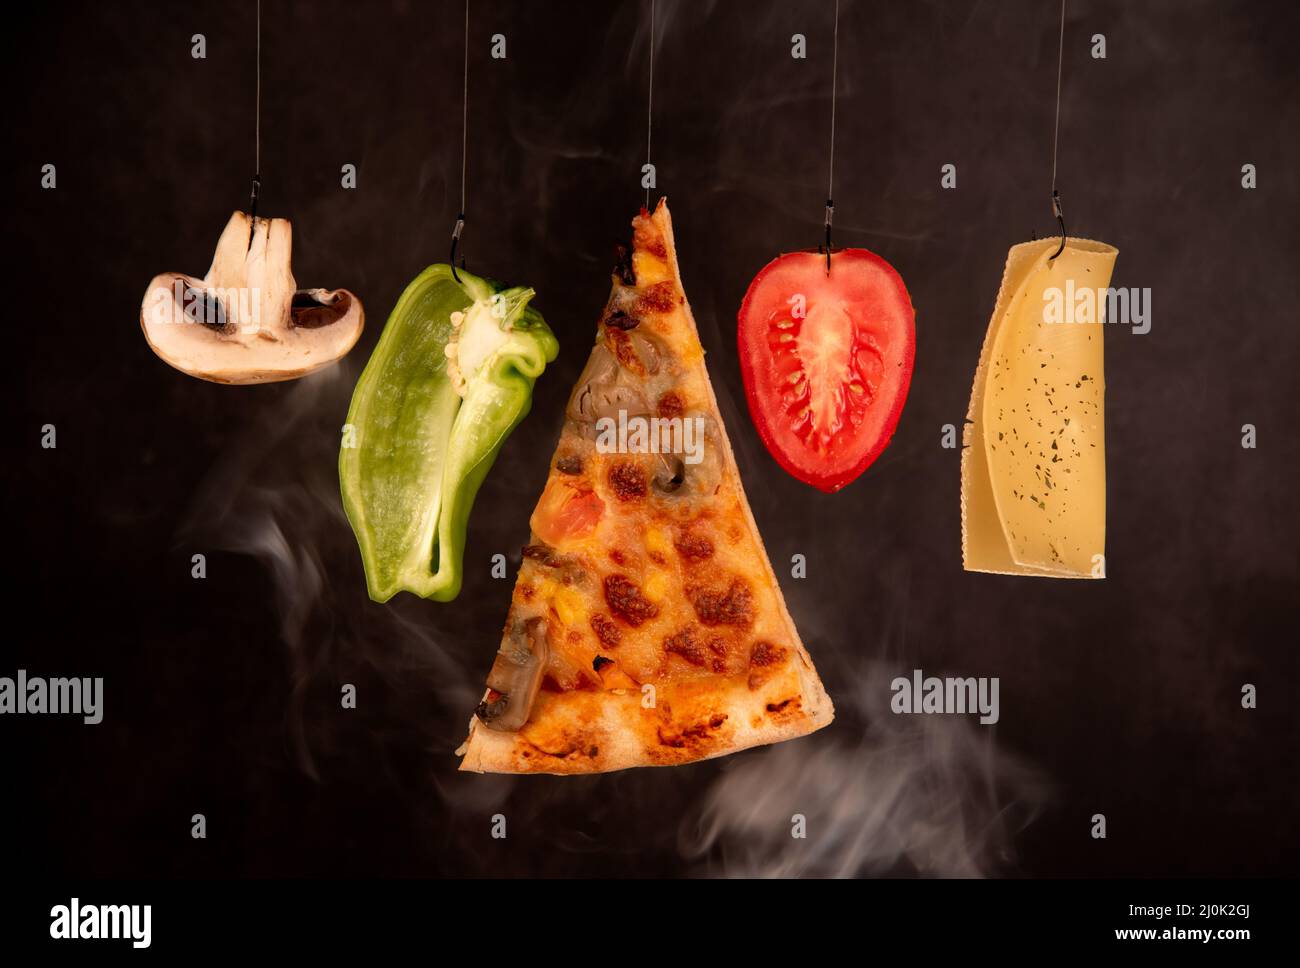 Slice of mozzarella delicious pizza tomato cheese peeper and mushroom ingredients. Food preparing Stock Photo